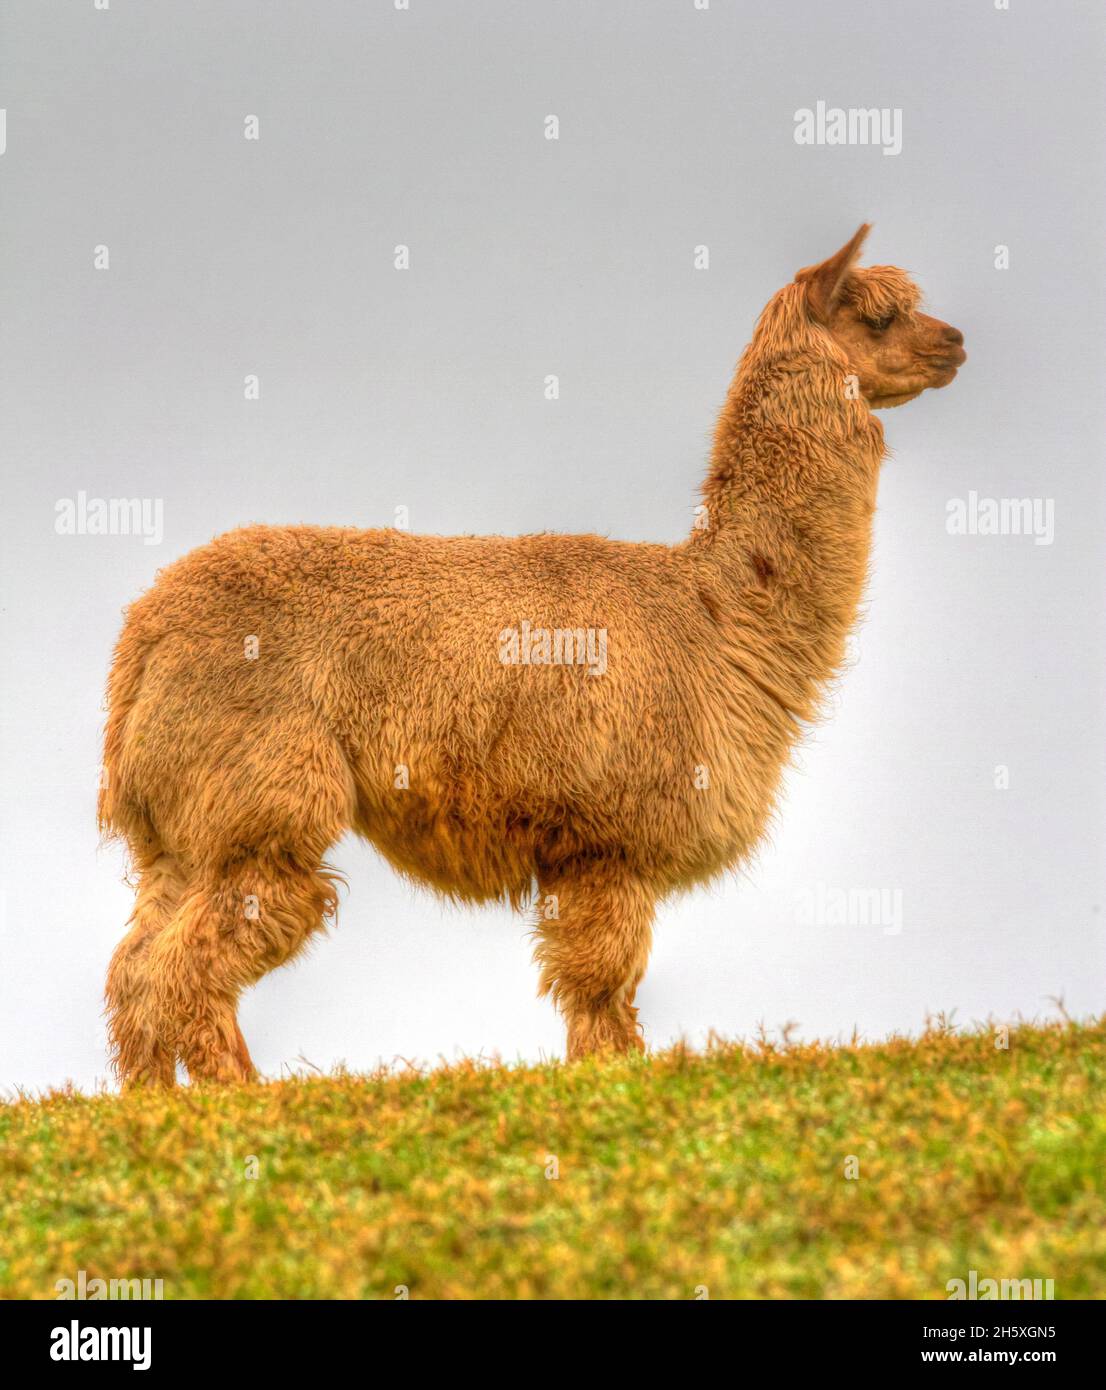 Alpaca animal brown and hairy fleece side profile Stock Photo